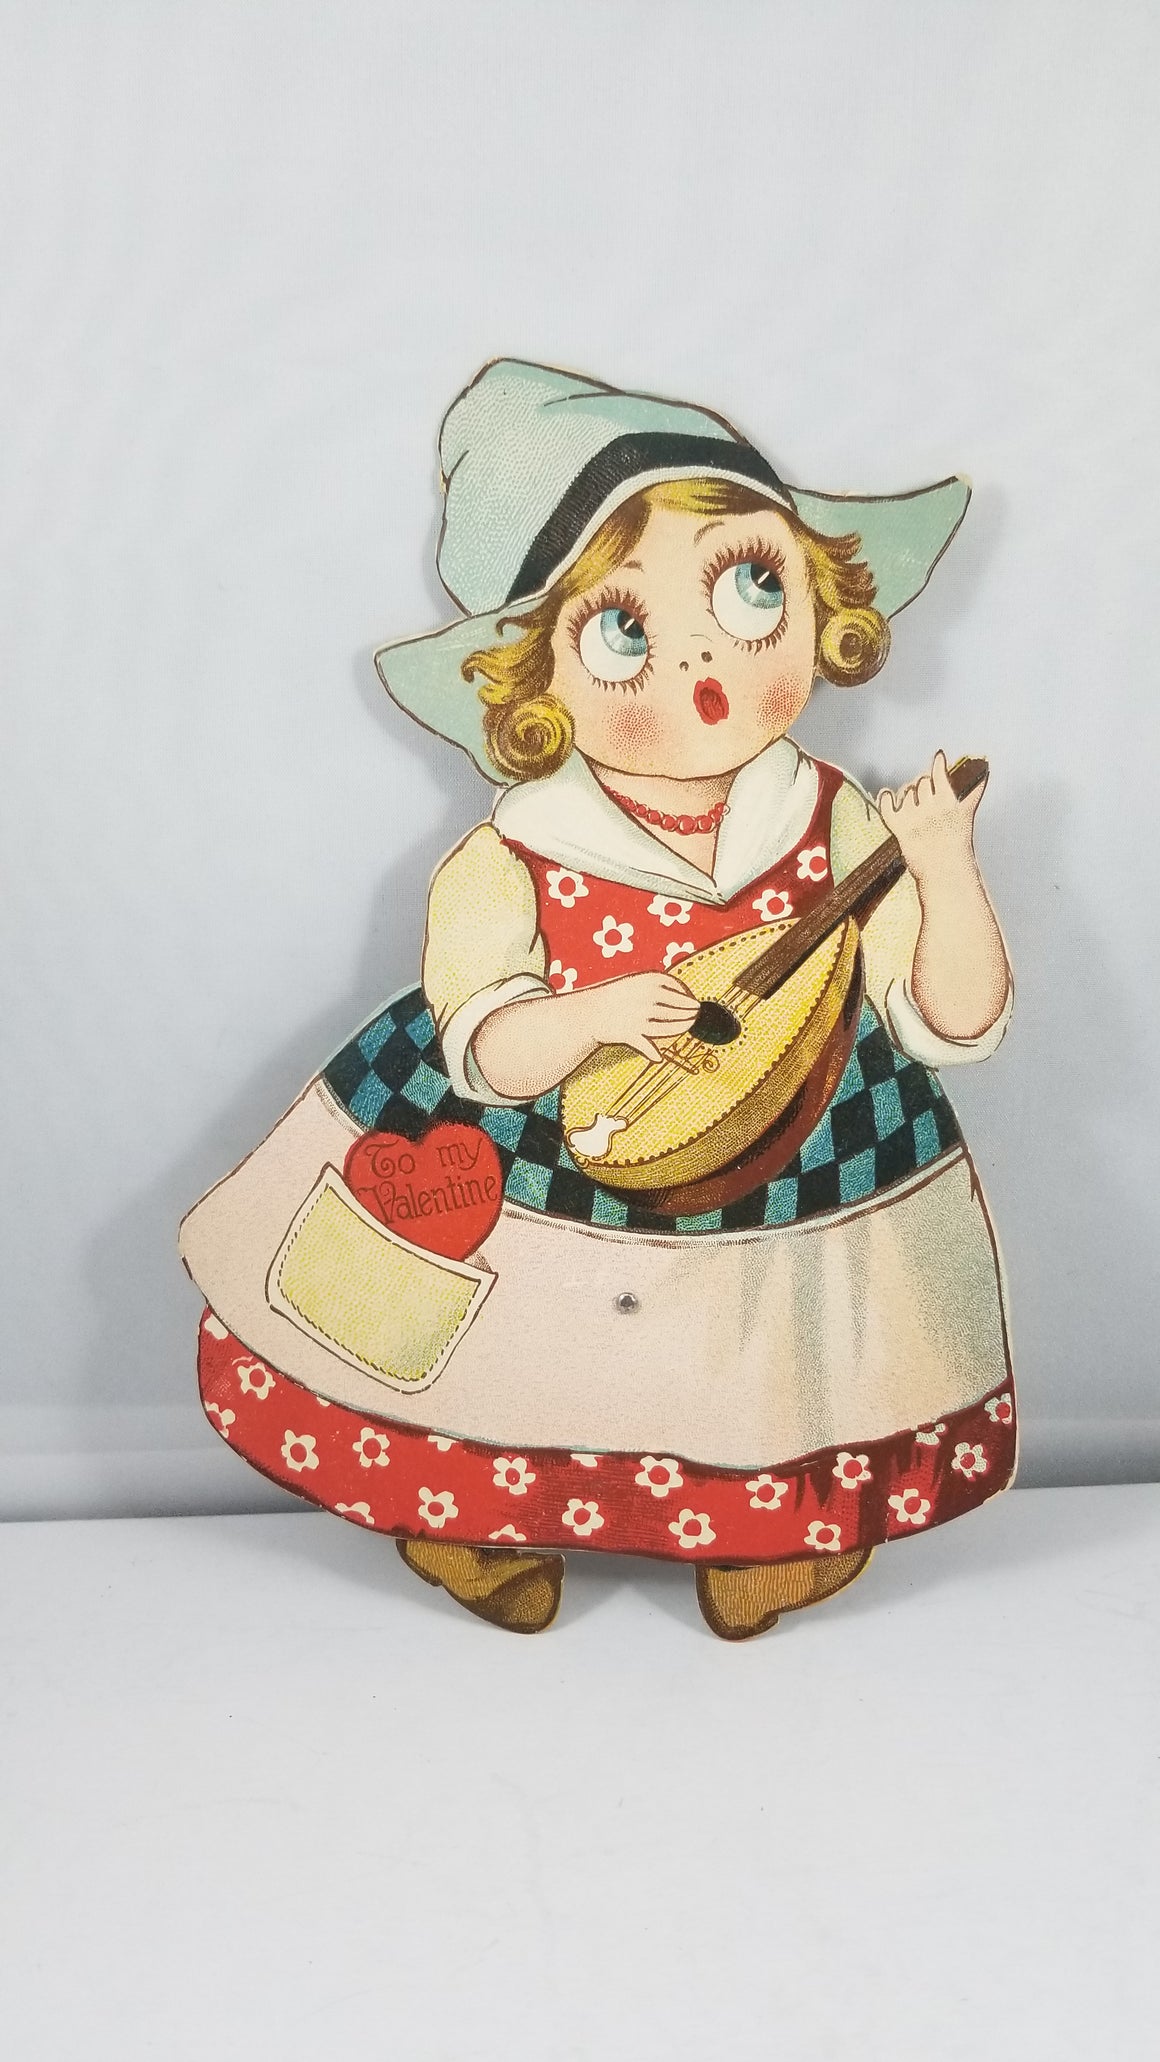 Vintage Antique Mechanical Valentine Card Walker Girl in Dutch Dress Playing Mandolin Larger Size Artist Chloe Preston